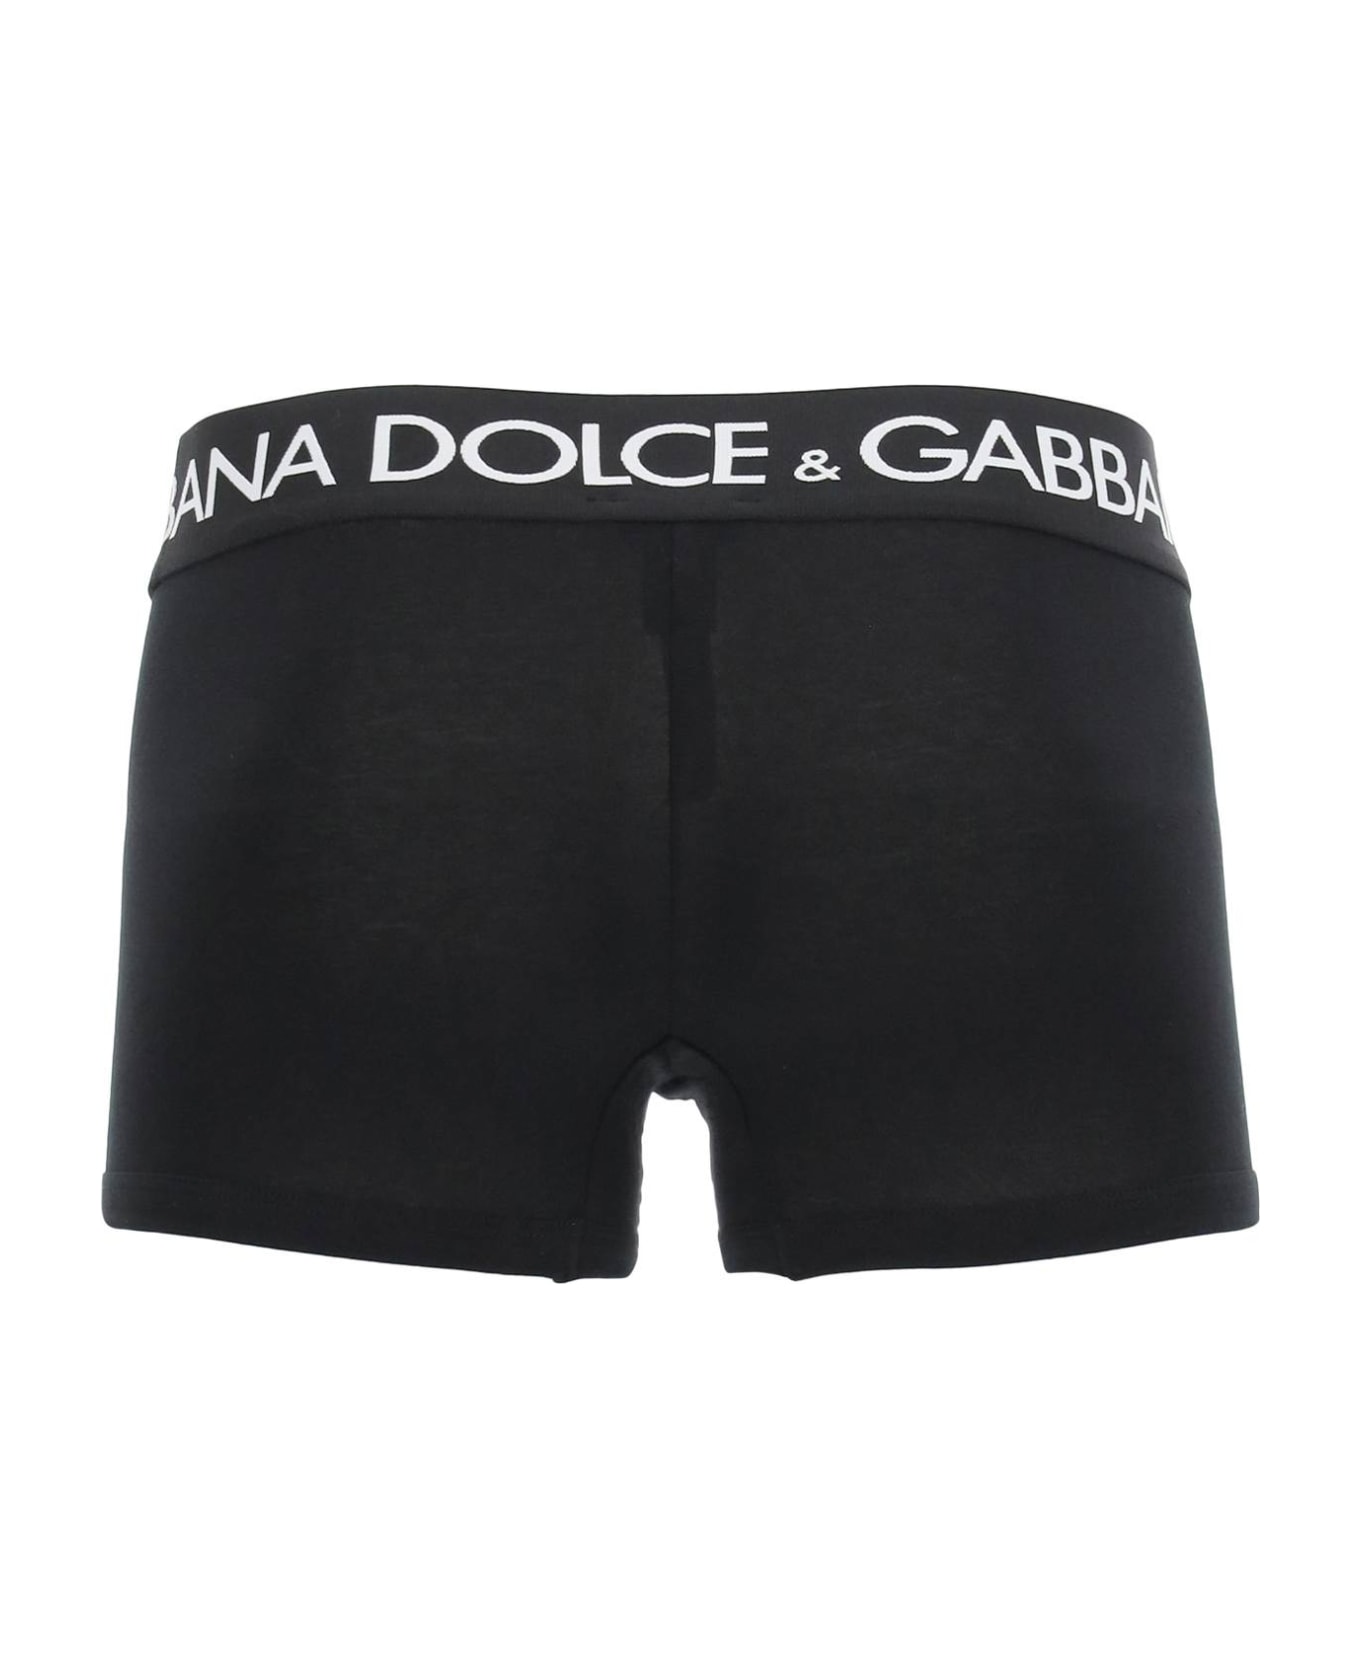 Dolce & Gabbana Bi-pack Underwear Boxer - Black